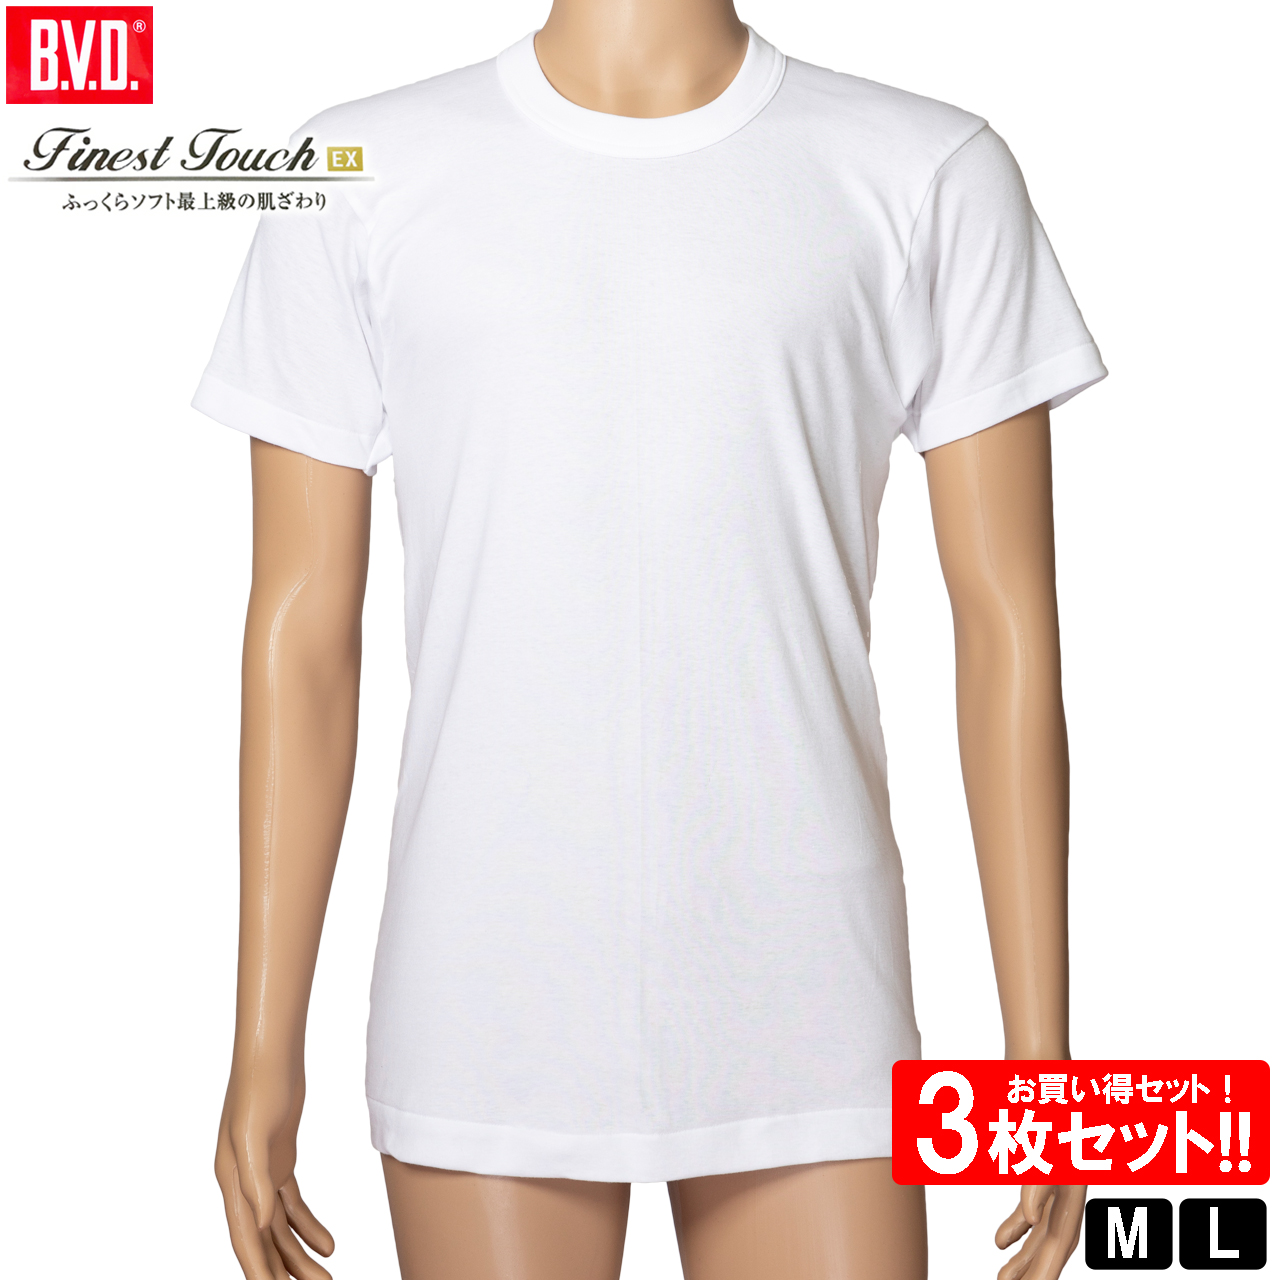 BVD Finest Touch EX 丸首半袖シャツ 3枚セット メンズ 肌着 インナー